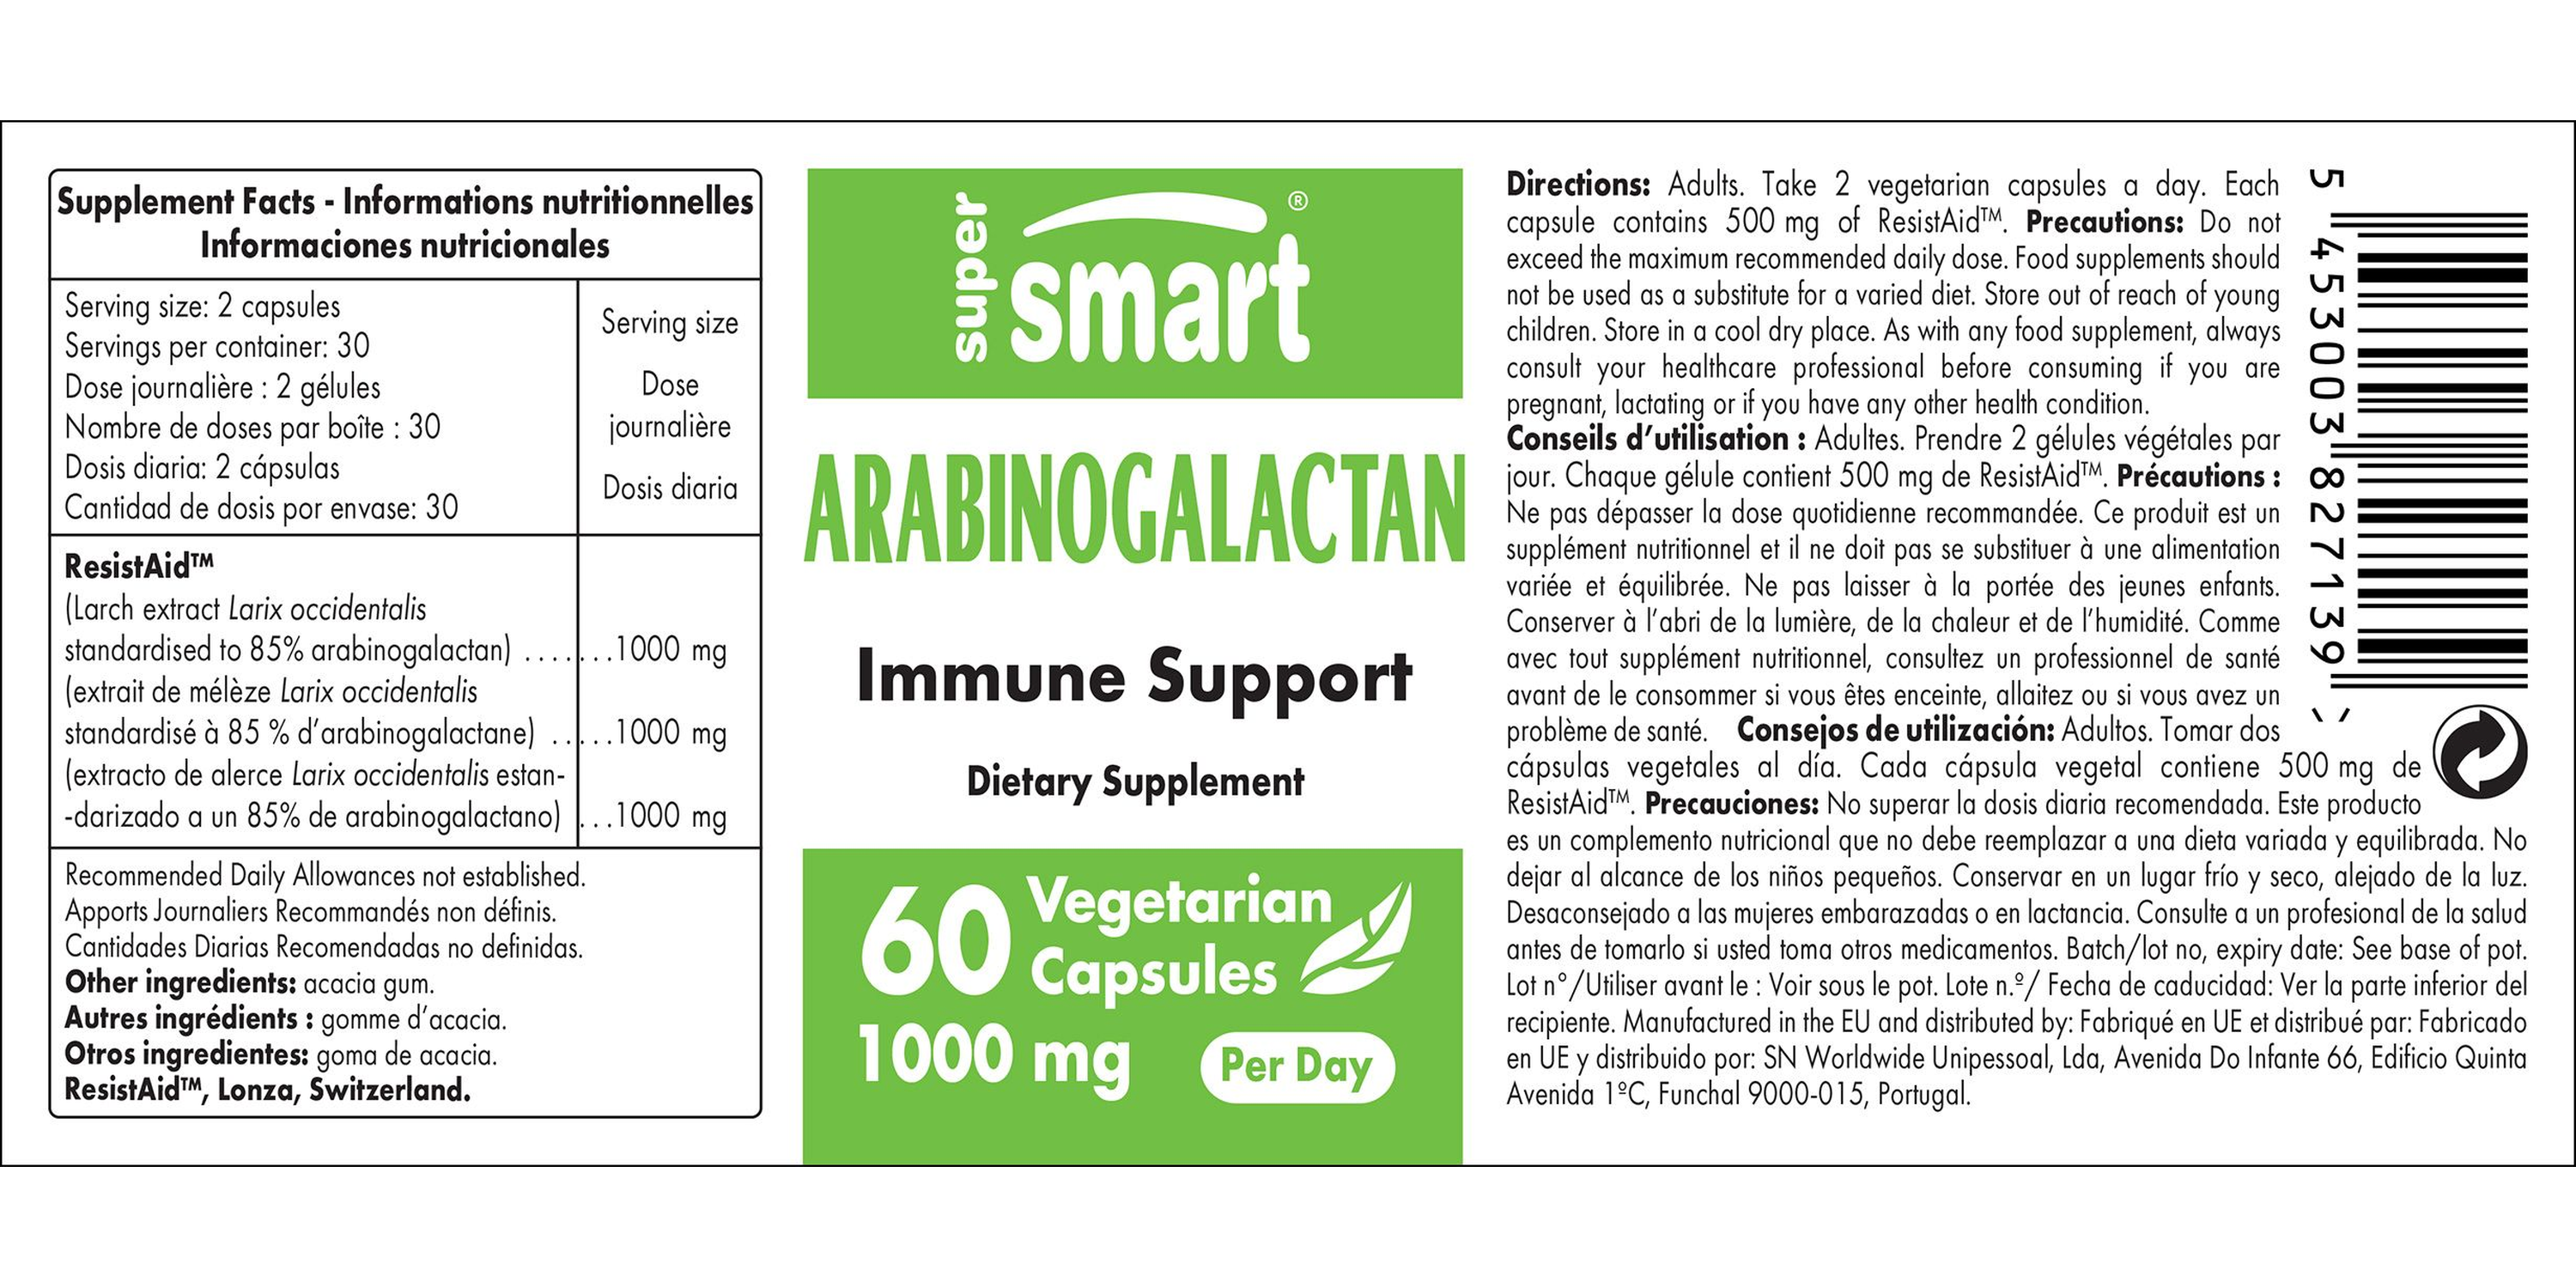 Arabinogalactan Supplement